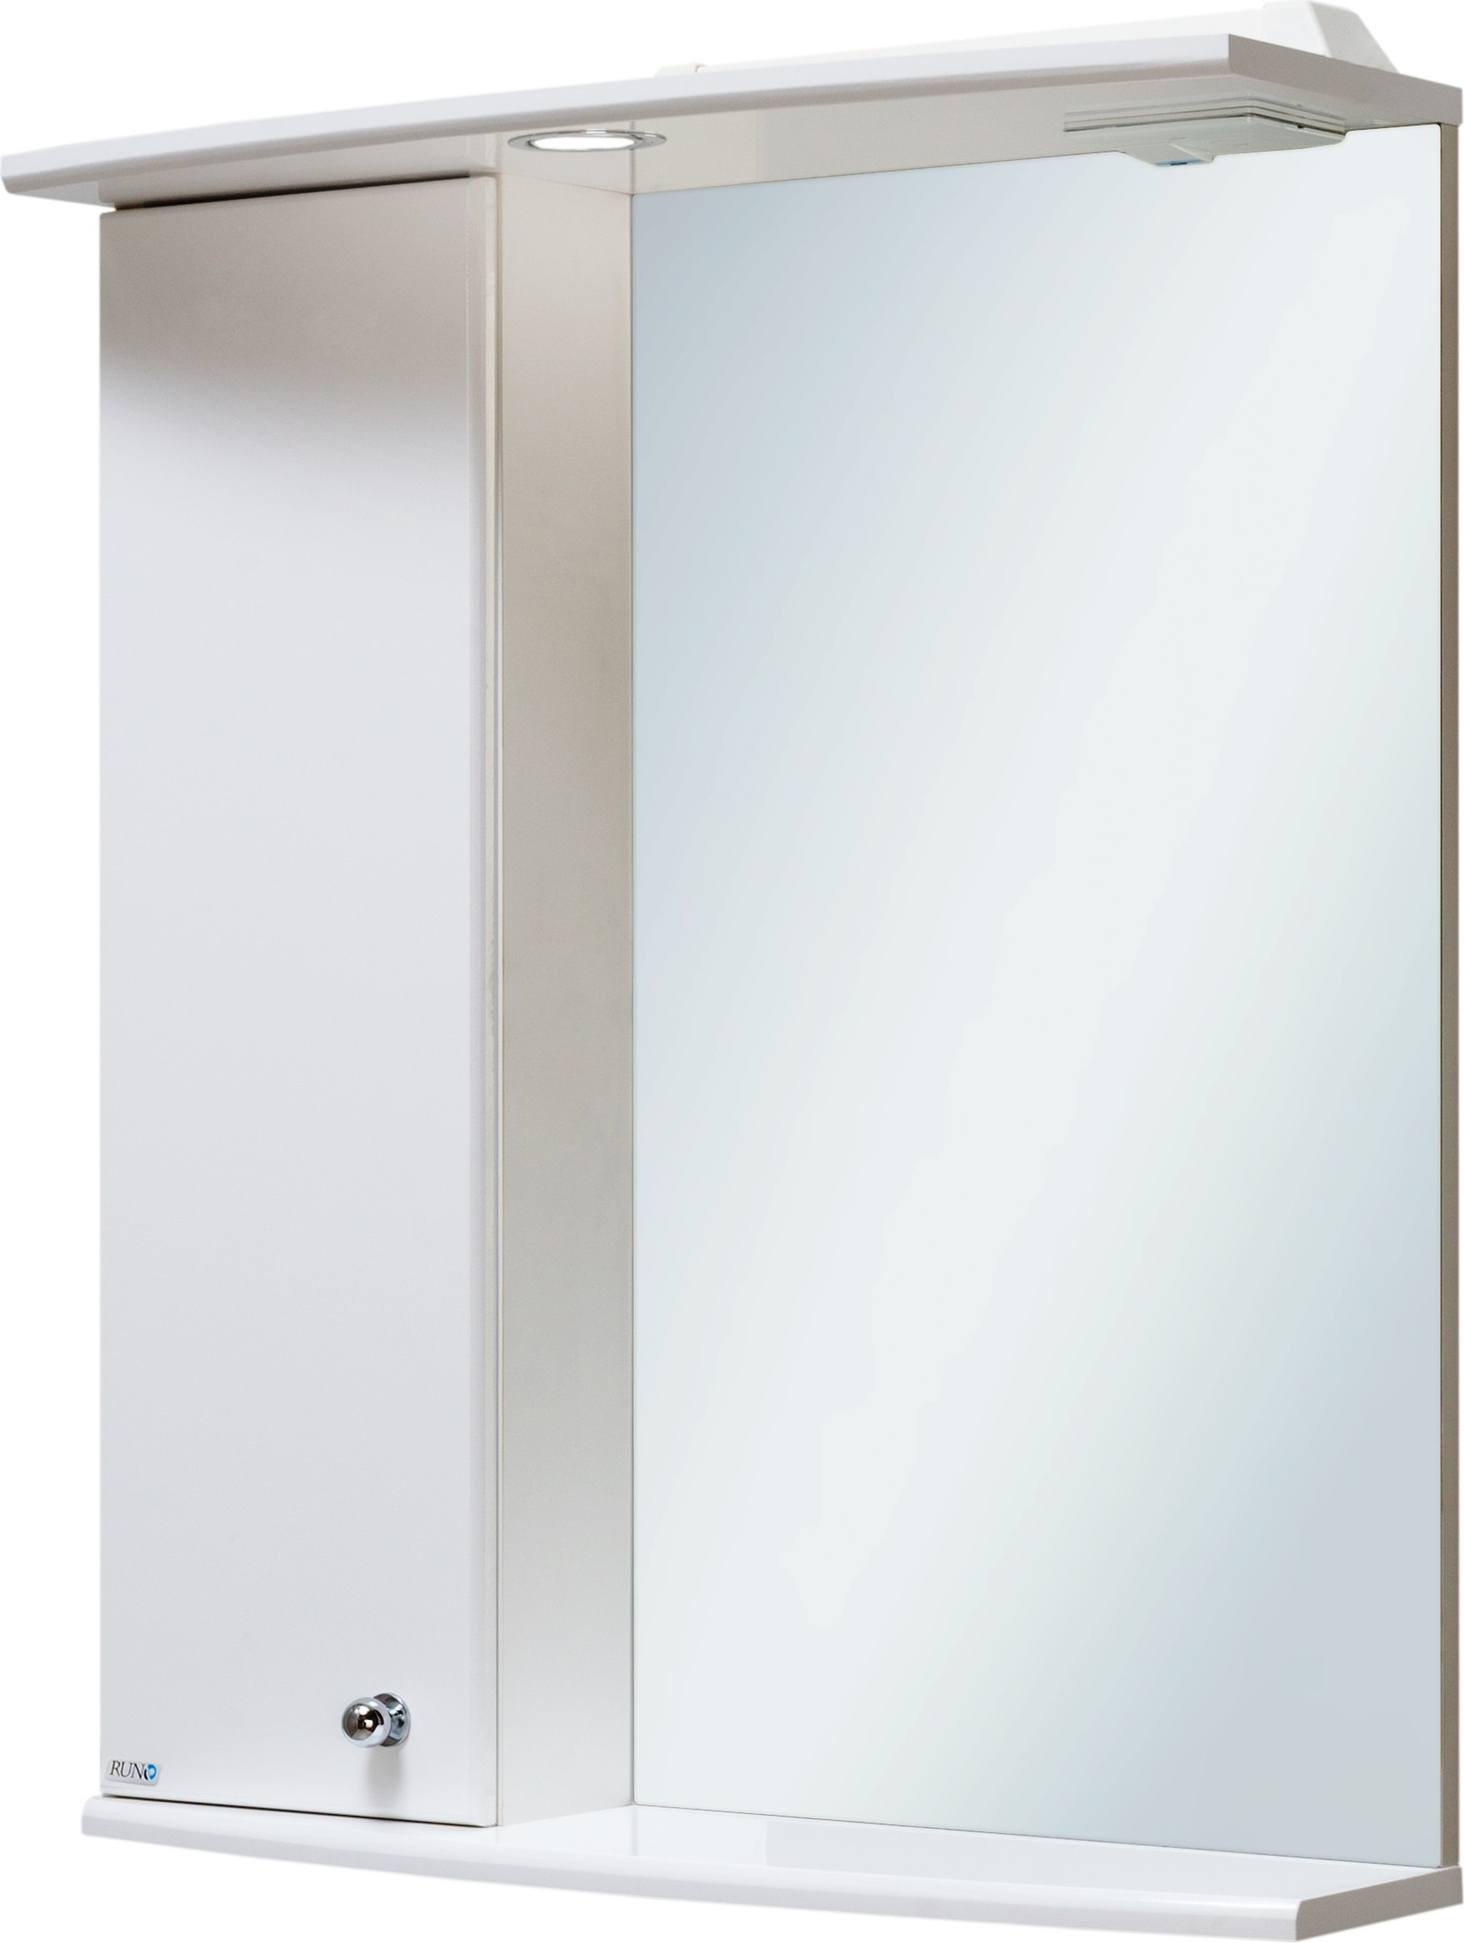 Шкаф с зеркалом для ванной комнаты навесной. Зеркало-шкаф Runo Кипарис 50. Зеркальный шкаф Runo 55 см. Зеркало-шкаф Runo карат 70.